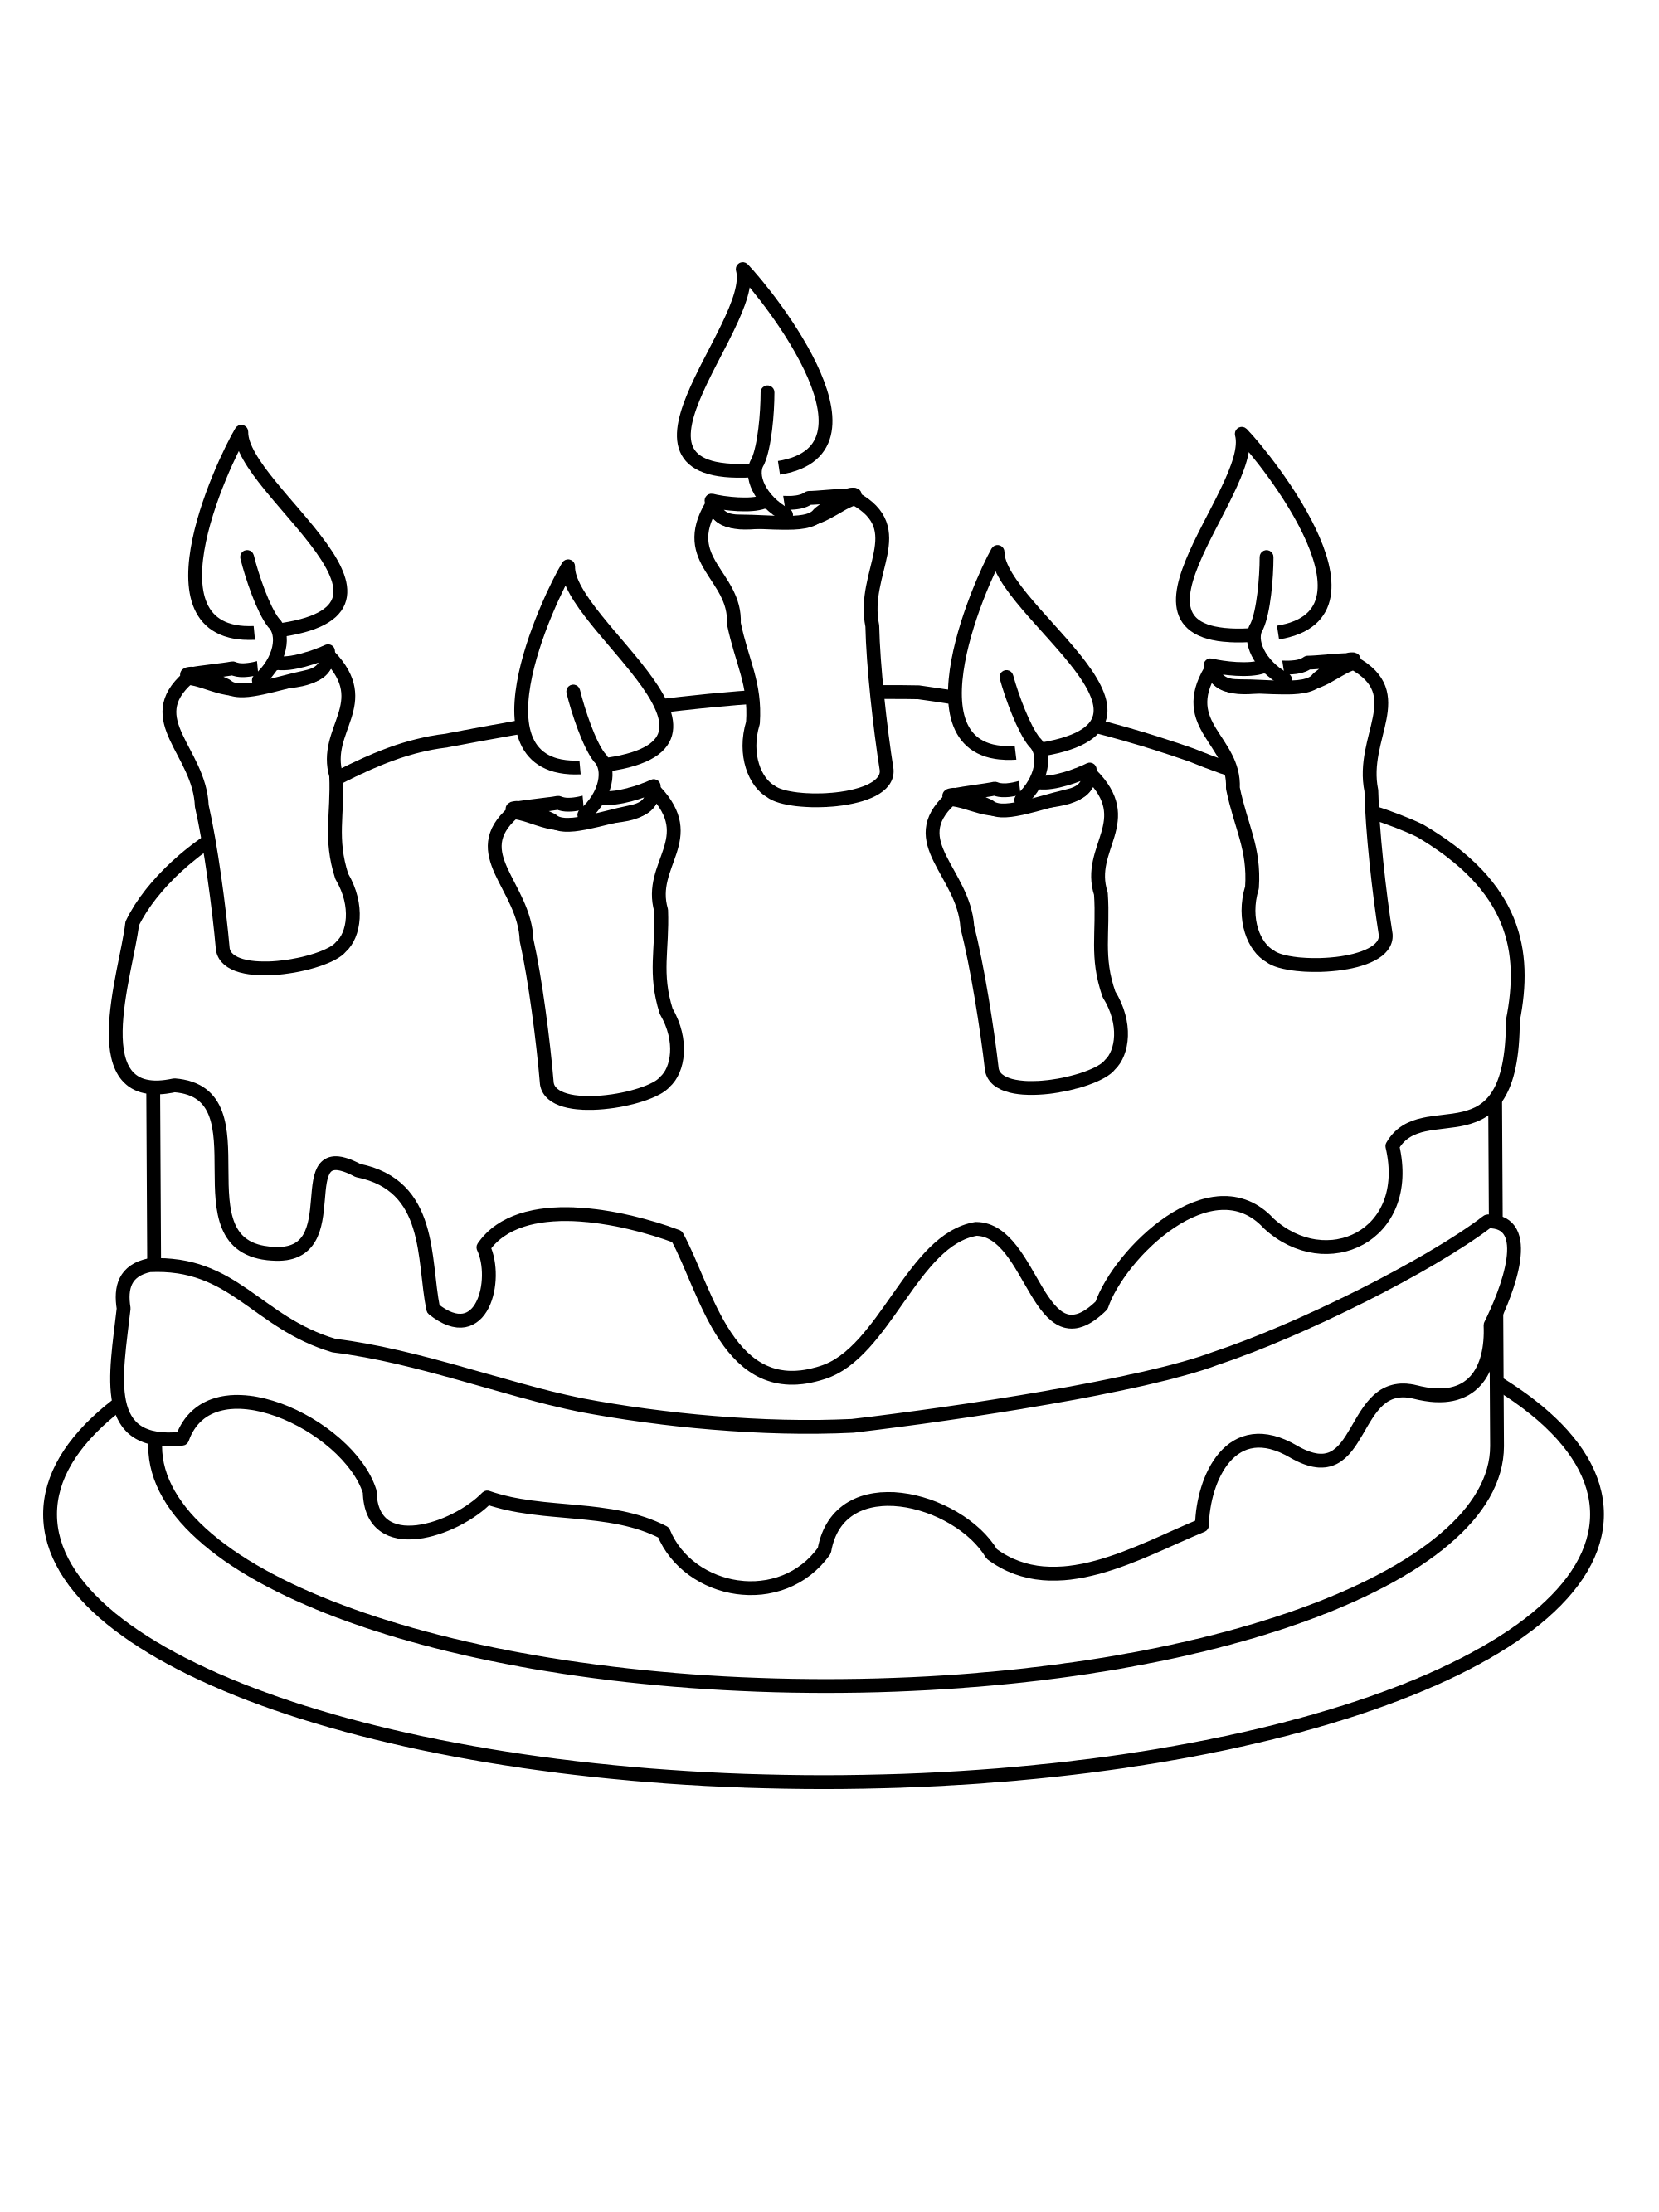 File:Draw this birthday cake.svg